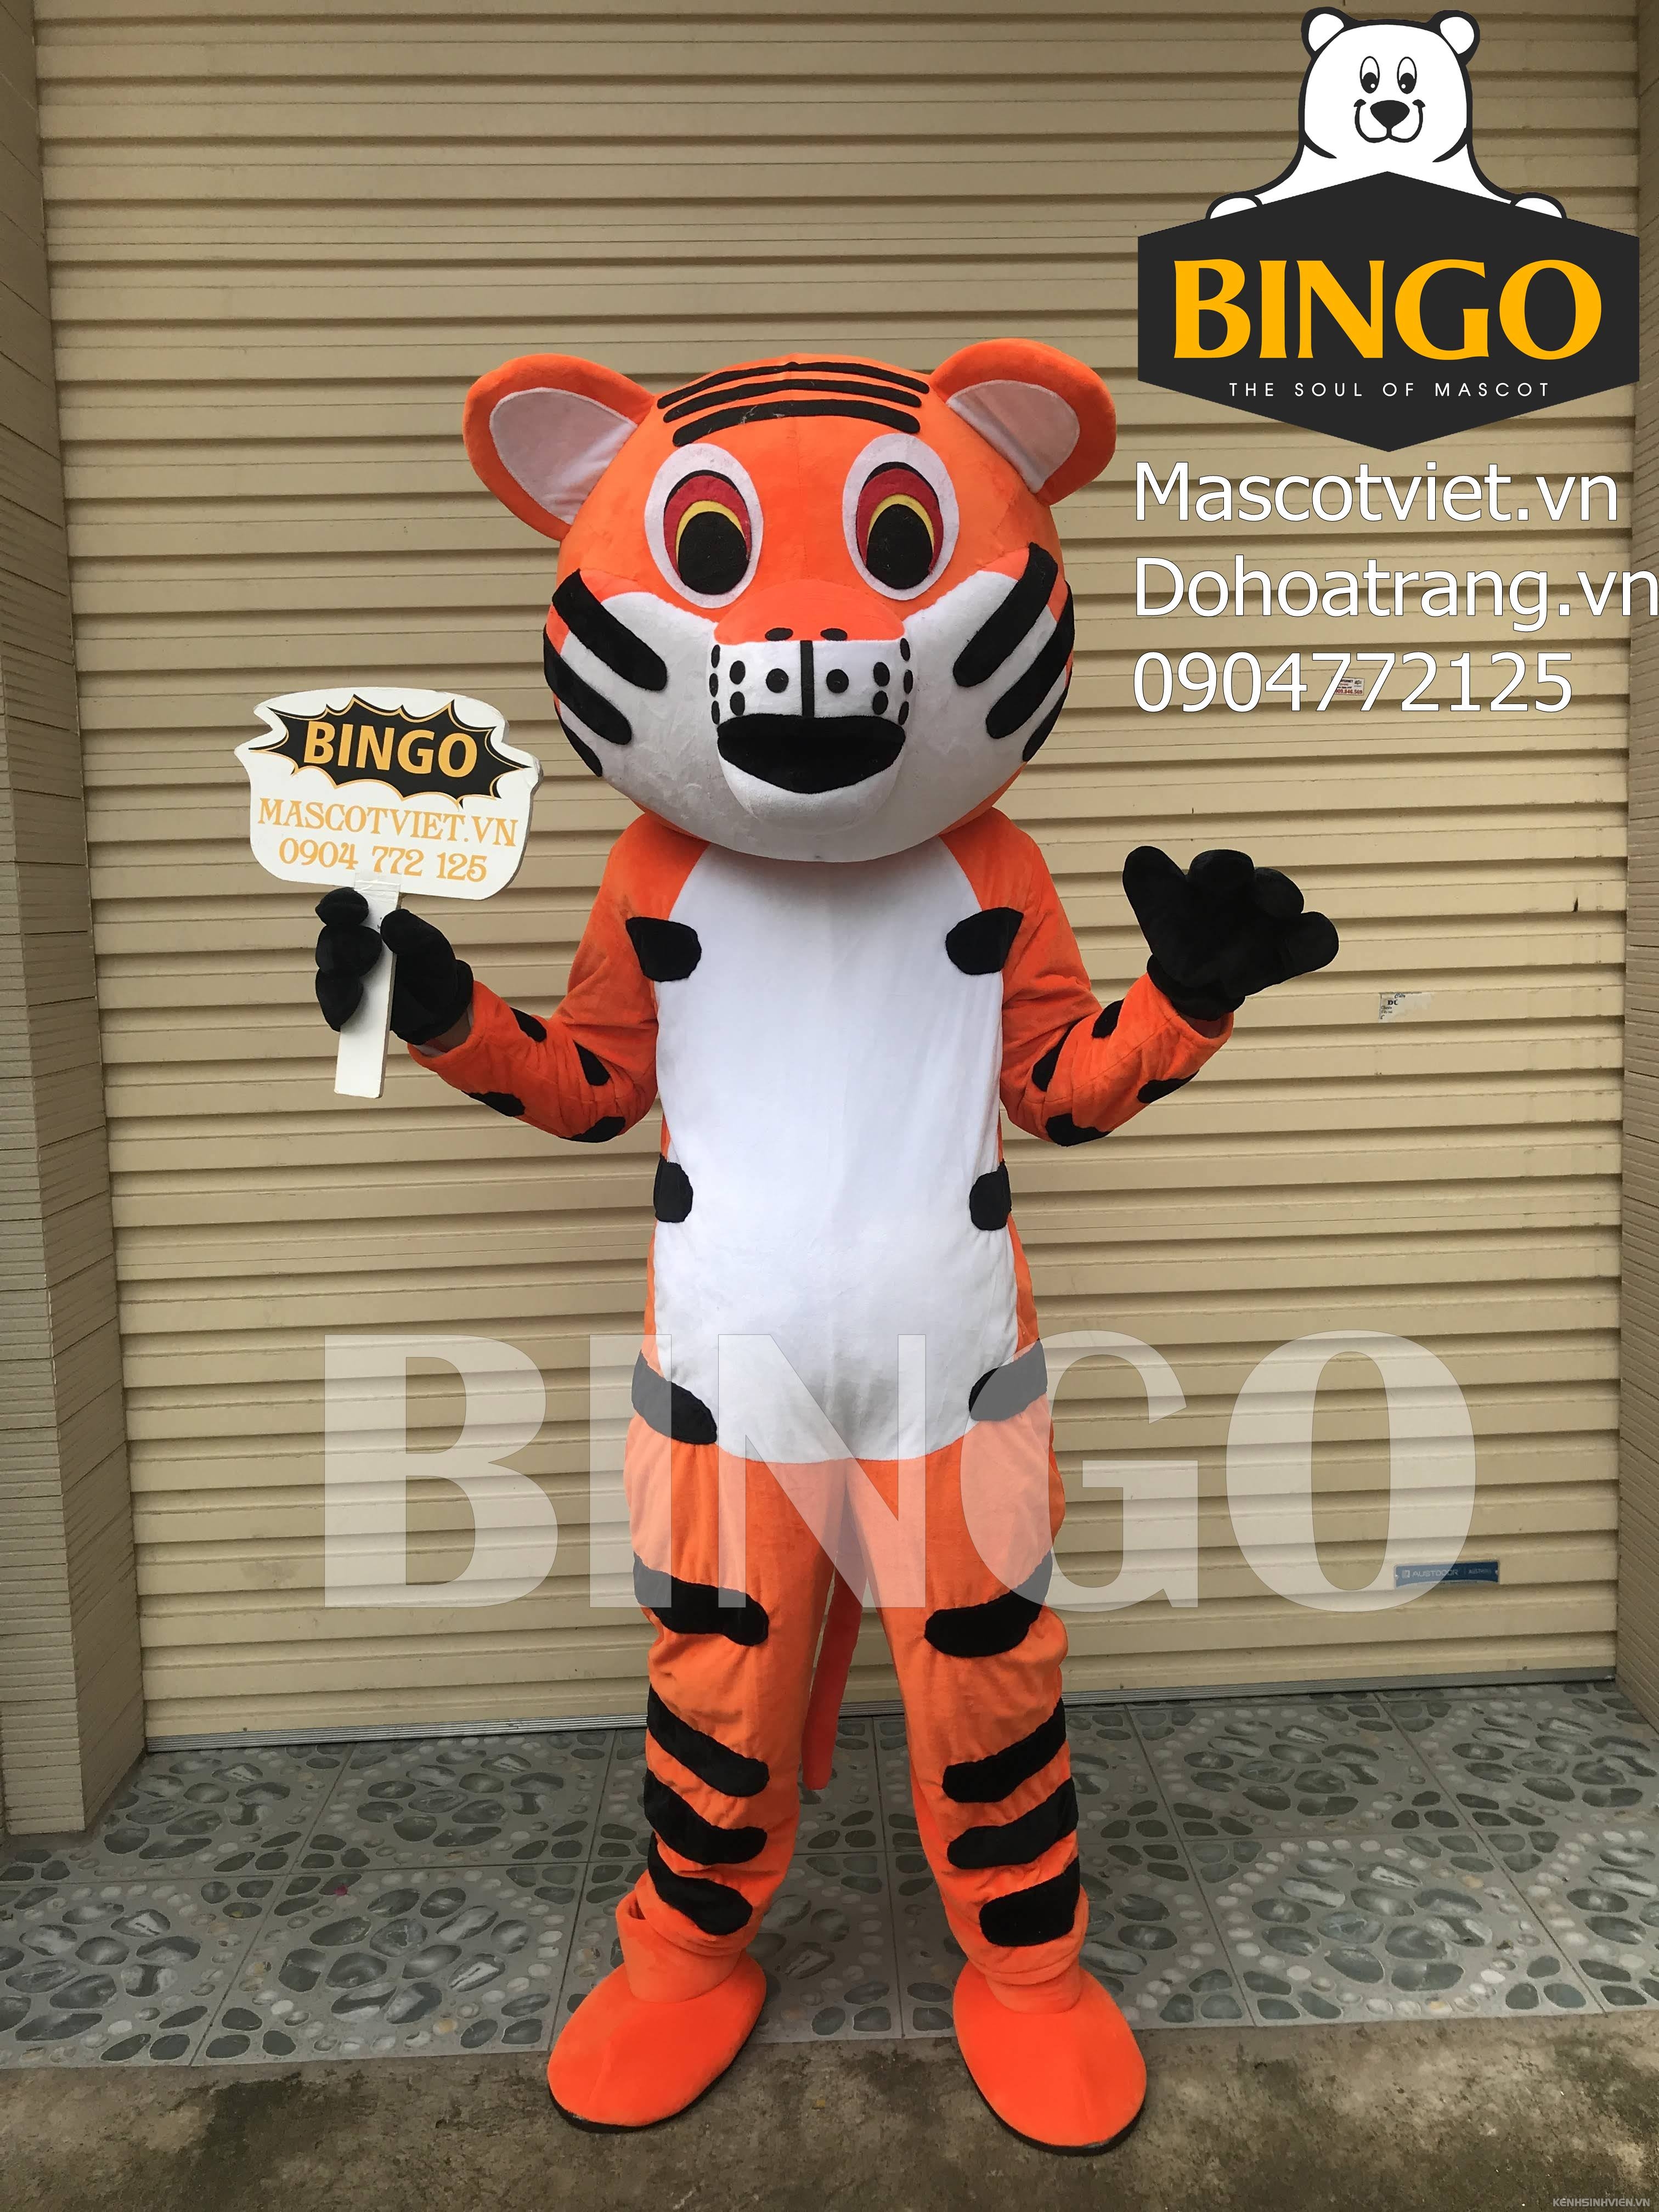 mascot-con-cop-bingo-costumes-0904772125.jpg